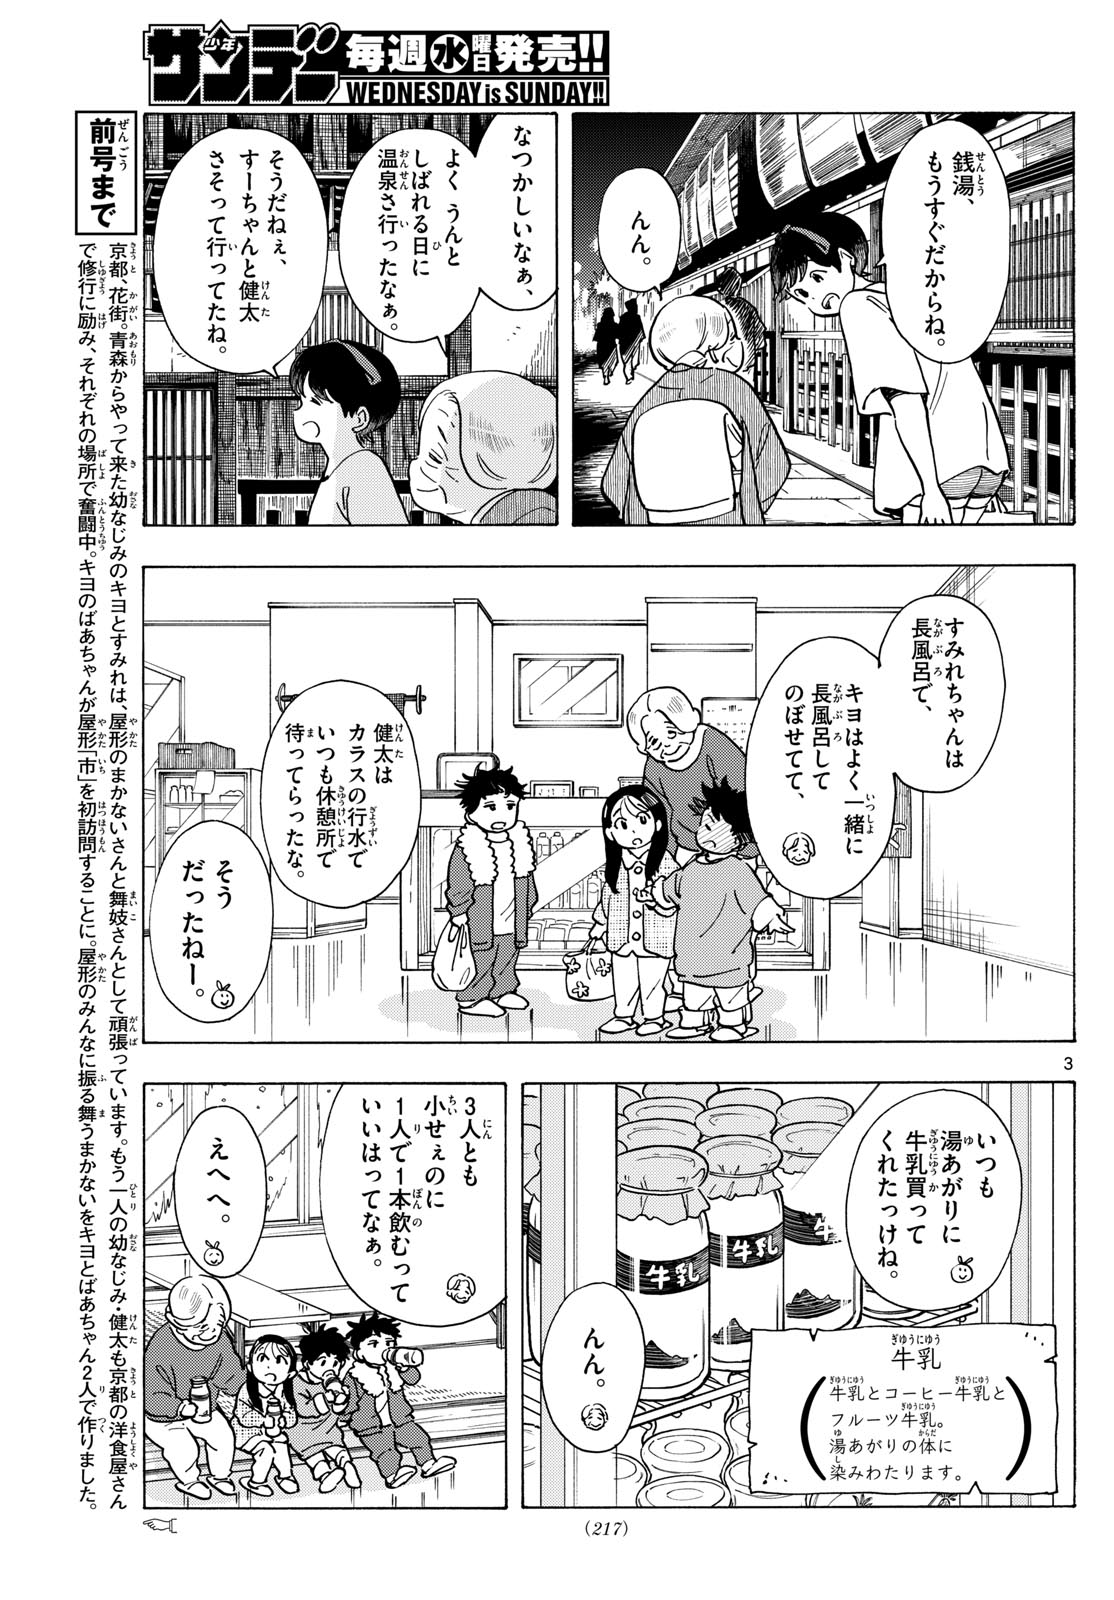 Maiko-san Chi no Makanai-san - Chapter 305 - Page 3